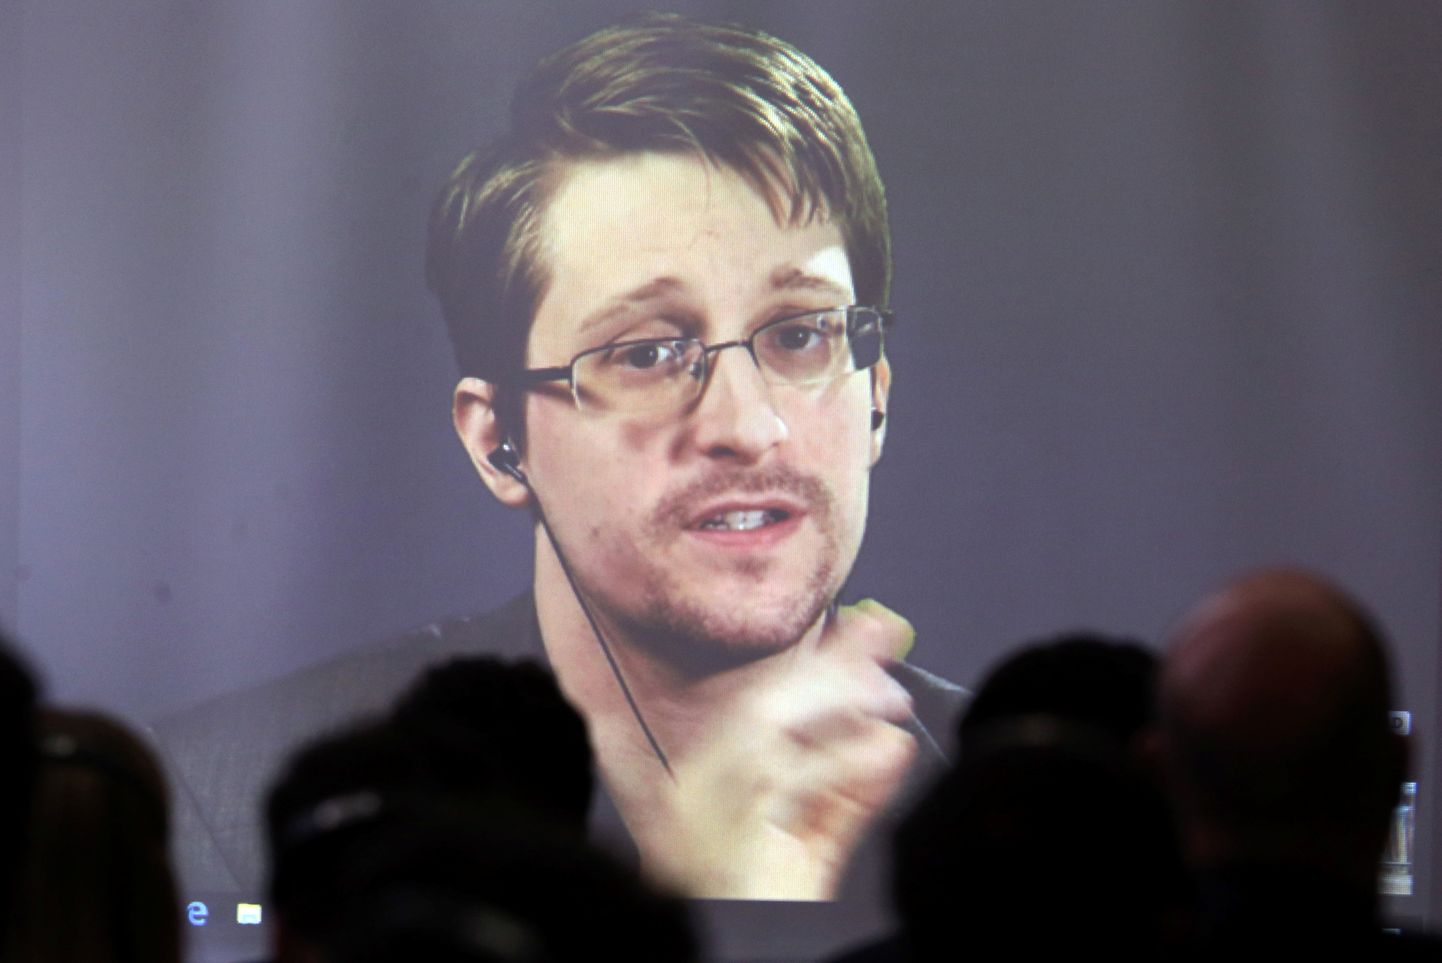 Edward Snowden videosilla vahendusel kõnelemas.